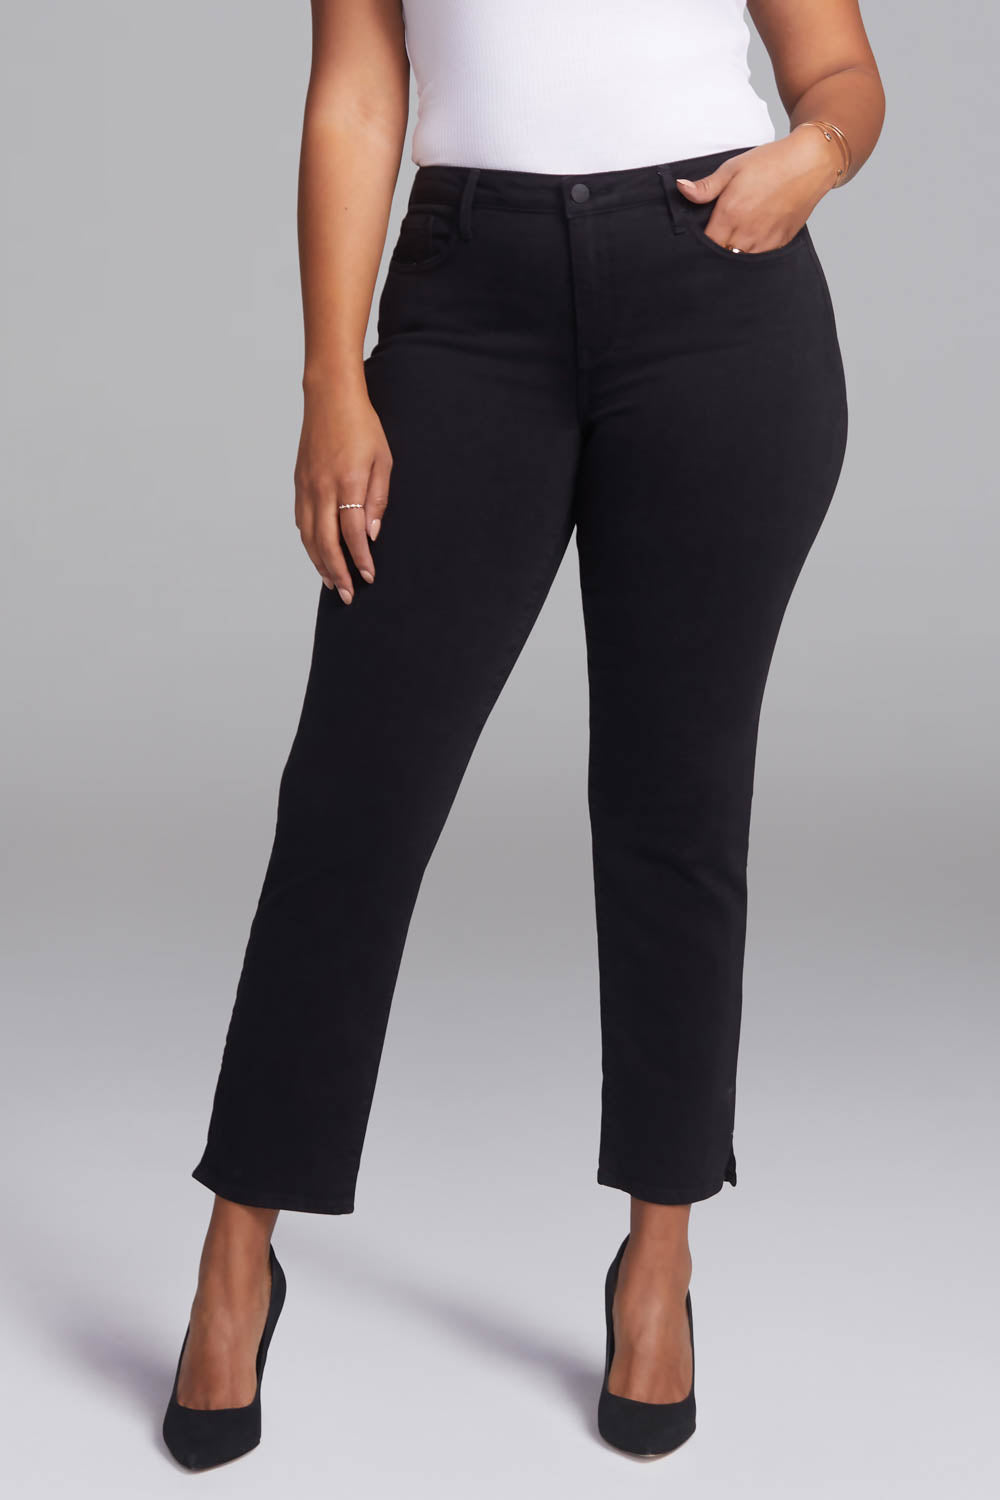 NYDJ Slim Straight Ankle Jeans In Curves 360 Denim With Side Slits - Black